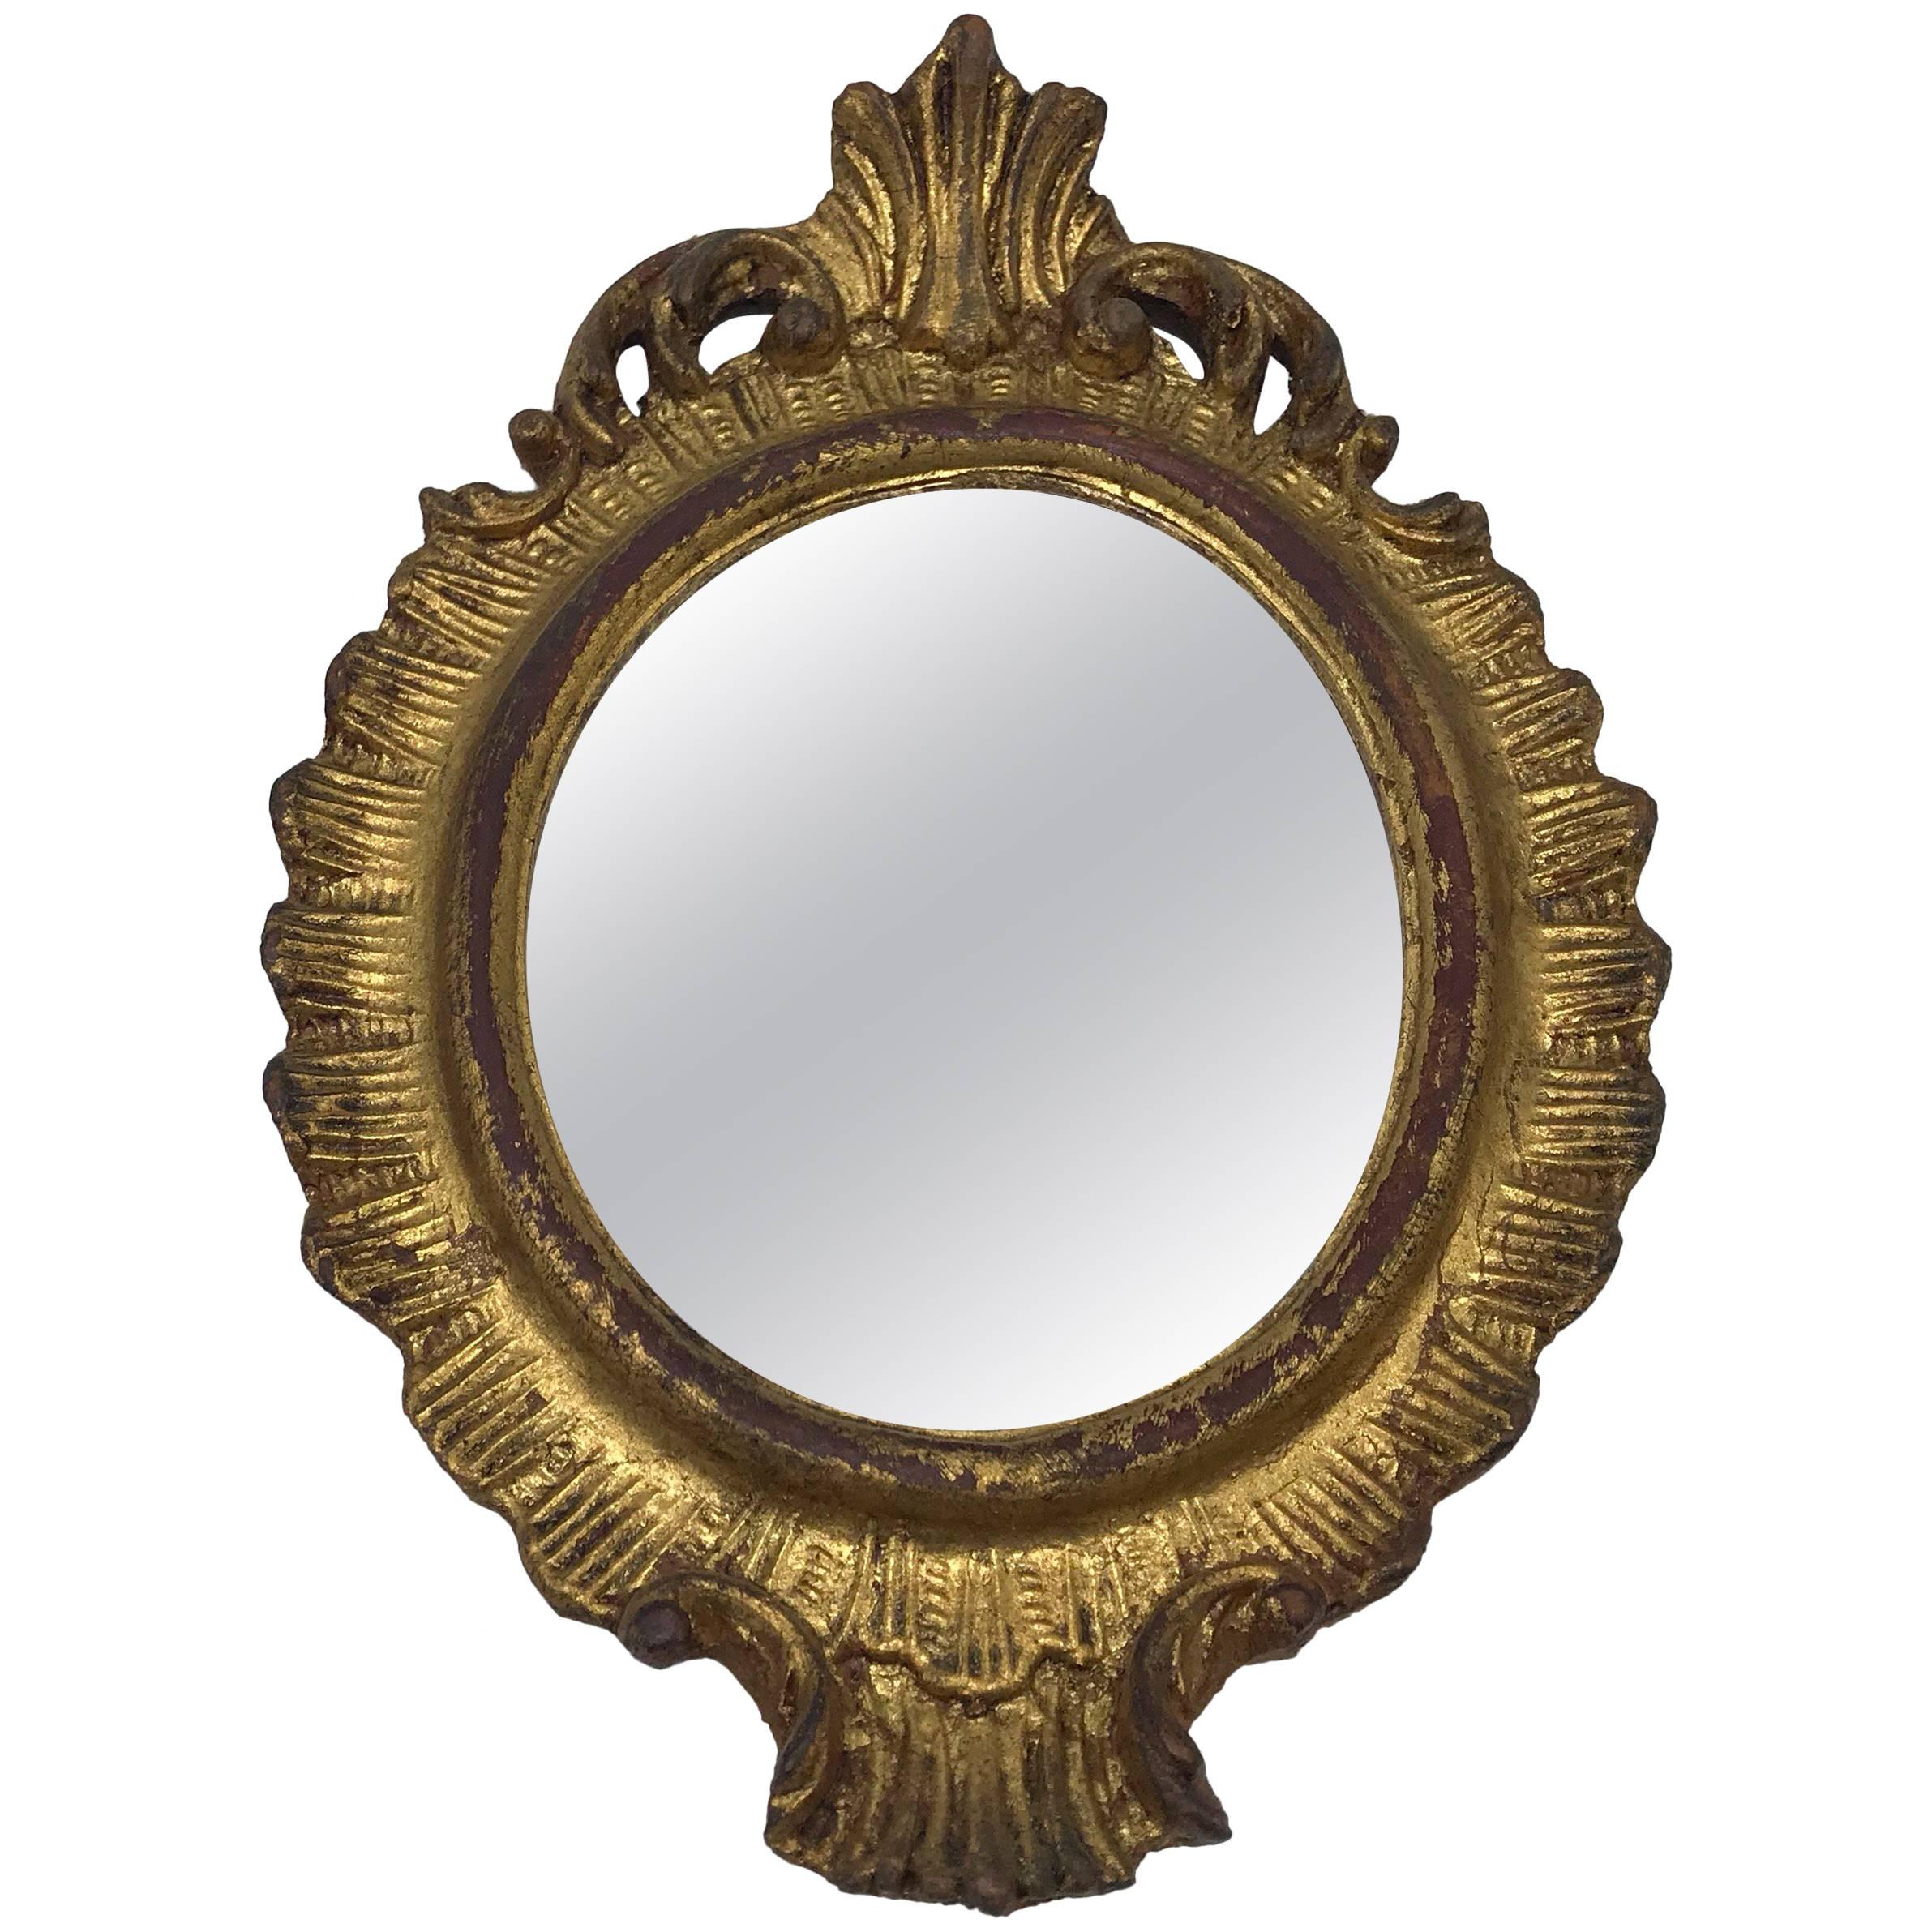 1960s Italian Florentine Oval Gilded Mirror